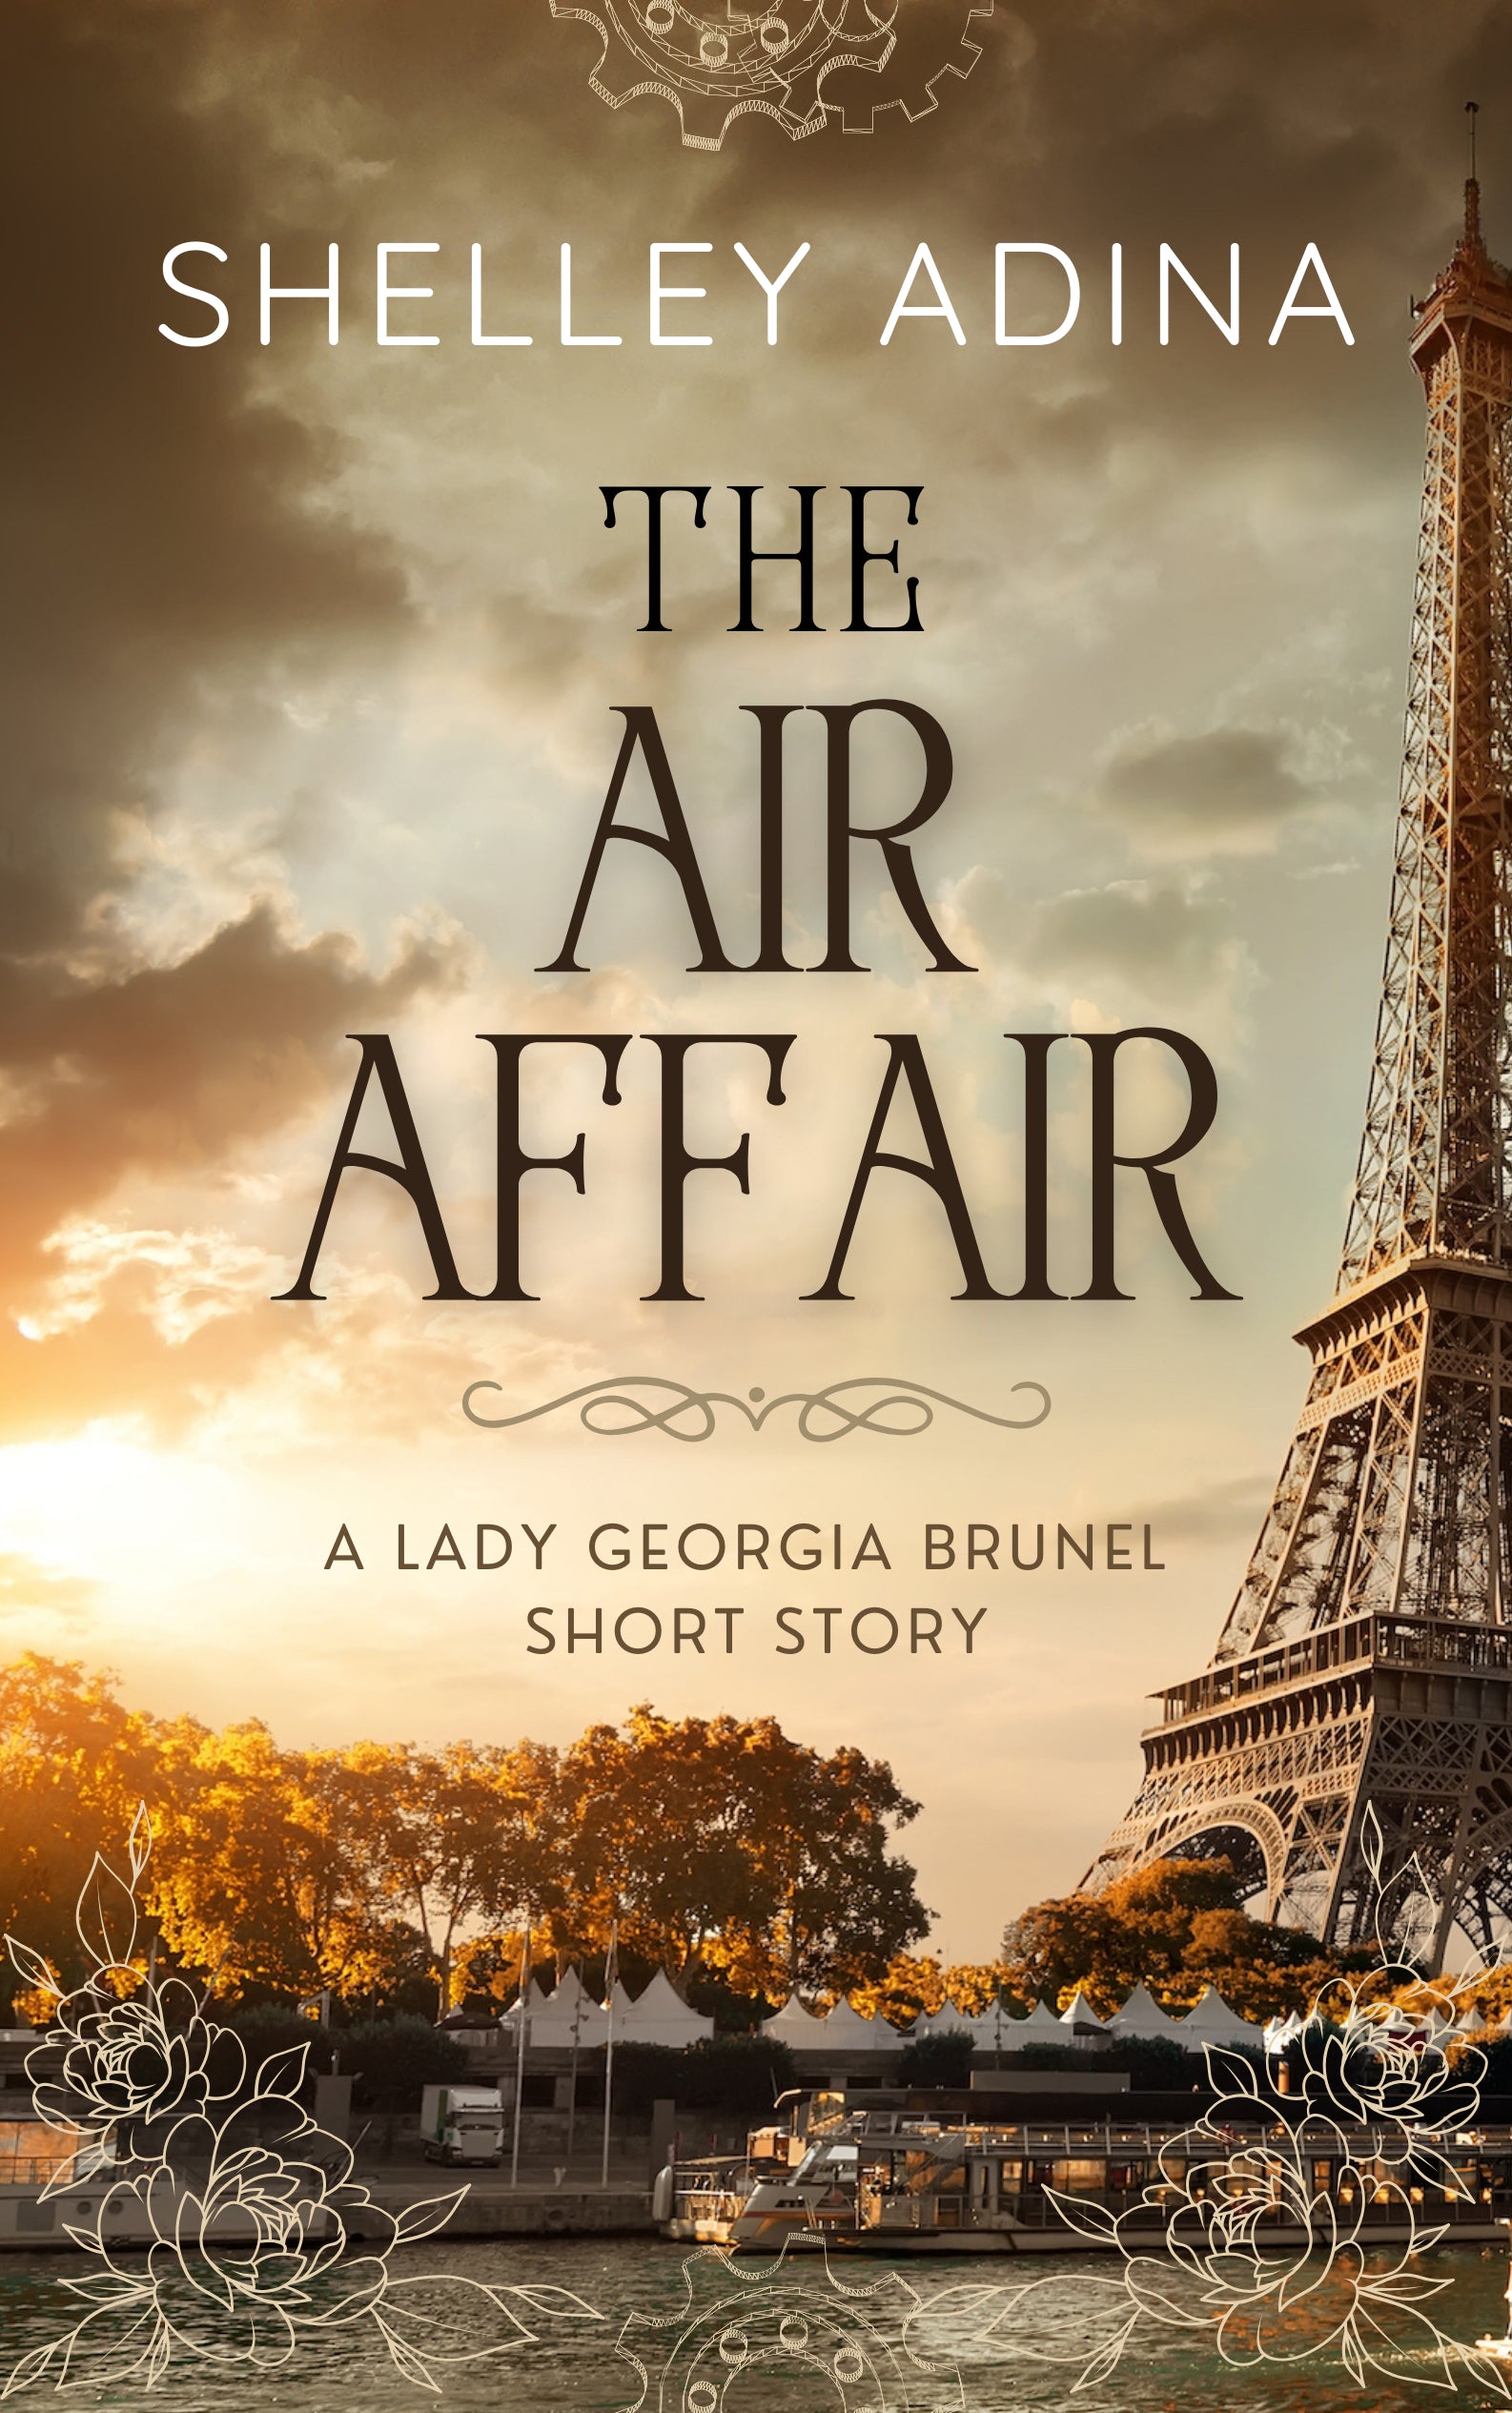 The Air Affair: A Lady Georgia Brunel short story by Shelley Adina